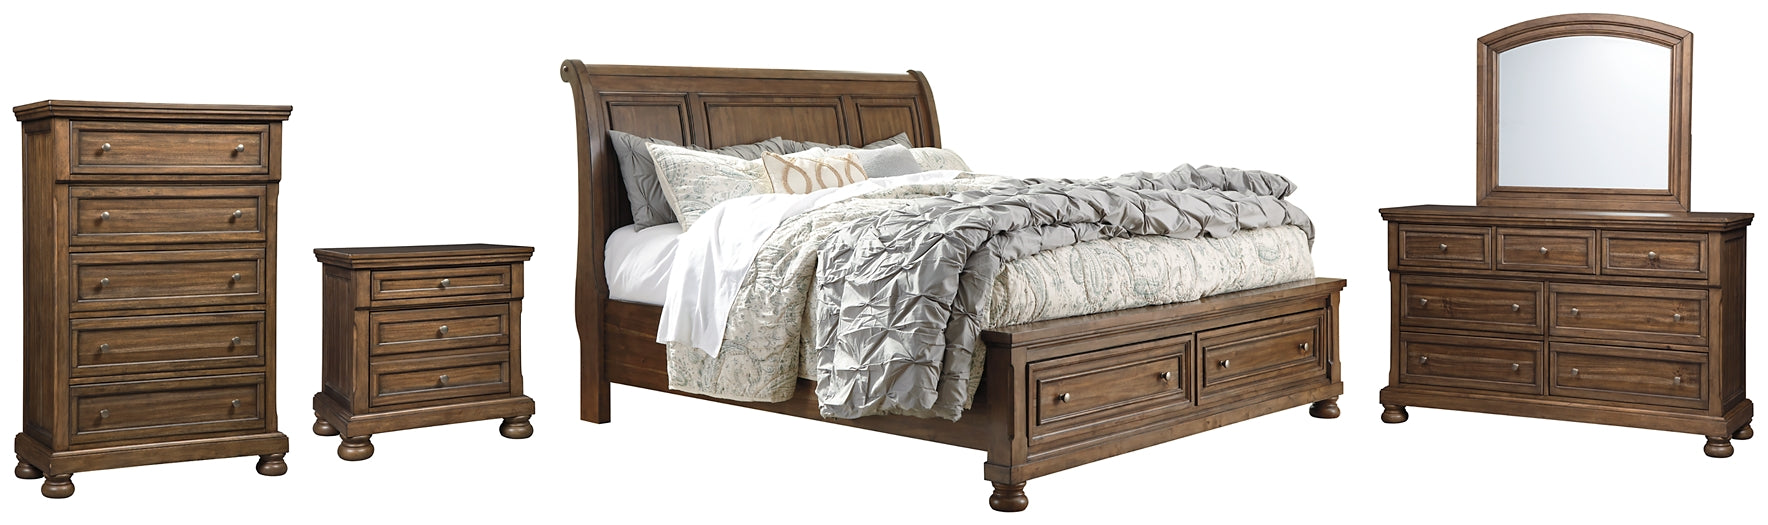 Flynnter Queen Sleigh Bed with 2 Storage Drawers with Mirrored Dresser, Chest and Nightstand Wilson Furniture (OH)  in Bridgeport, Ohio. Serving Bridgeport, Yorkville, Bellaire, & Avondale